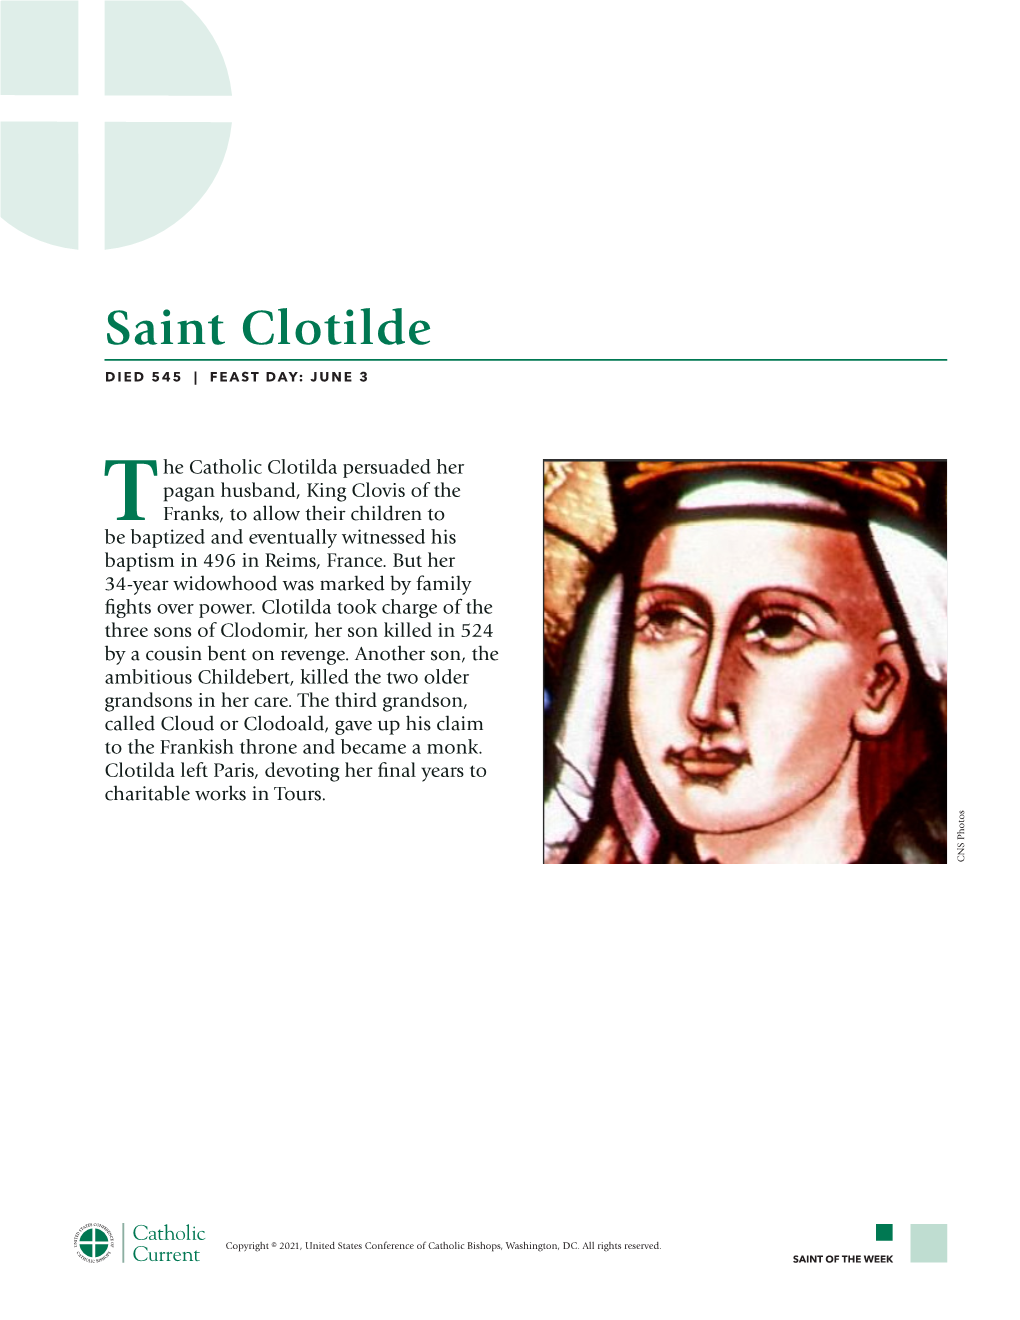 Saint Clotilde